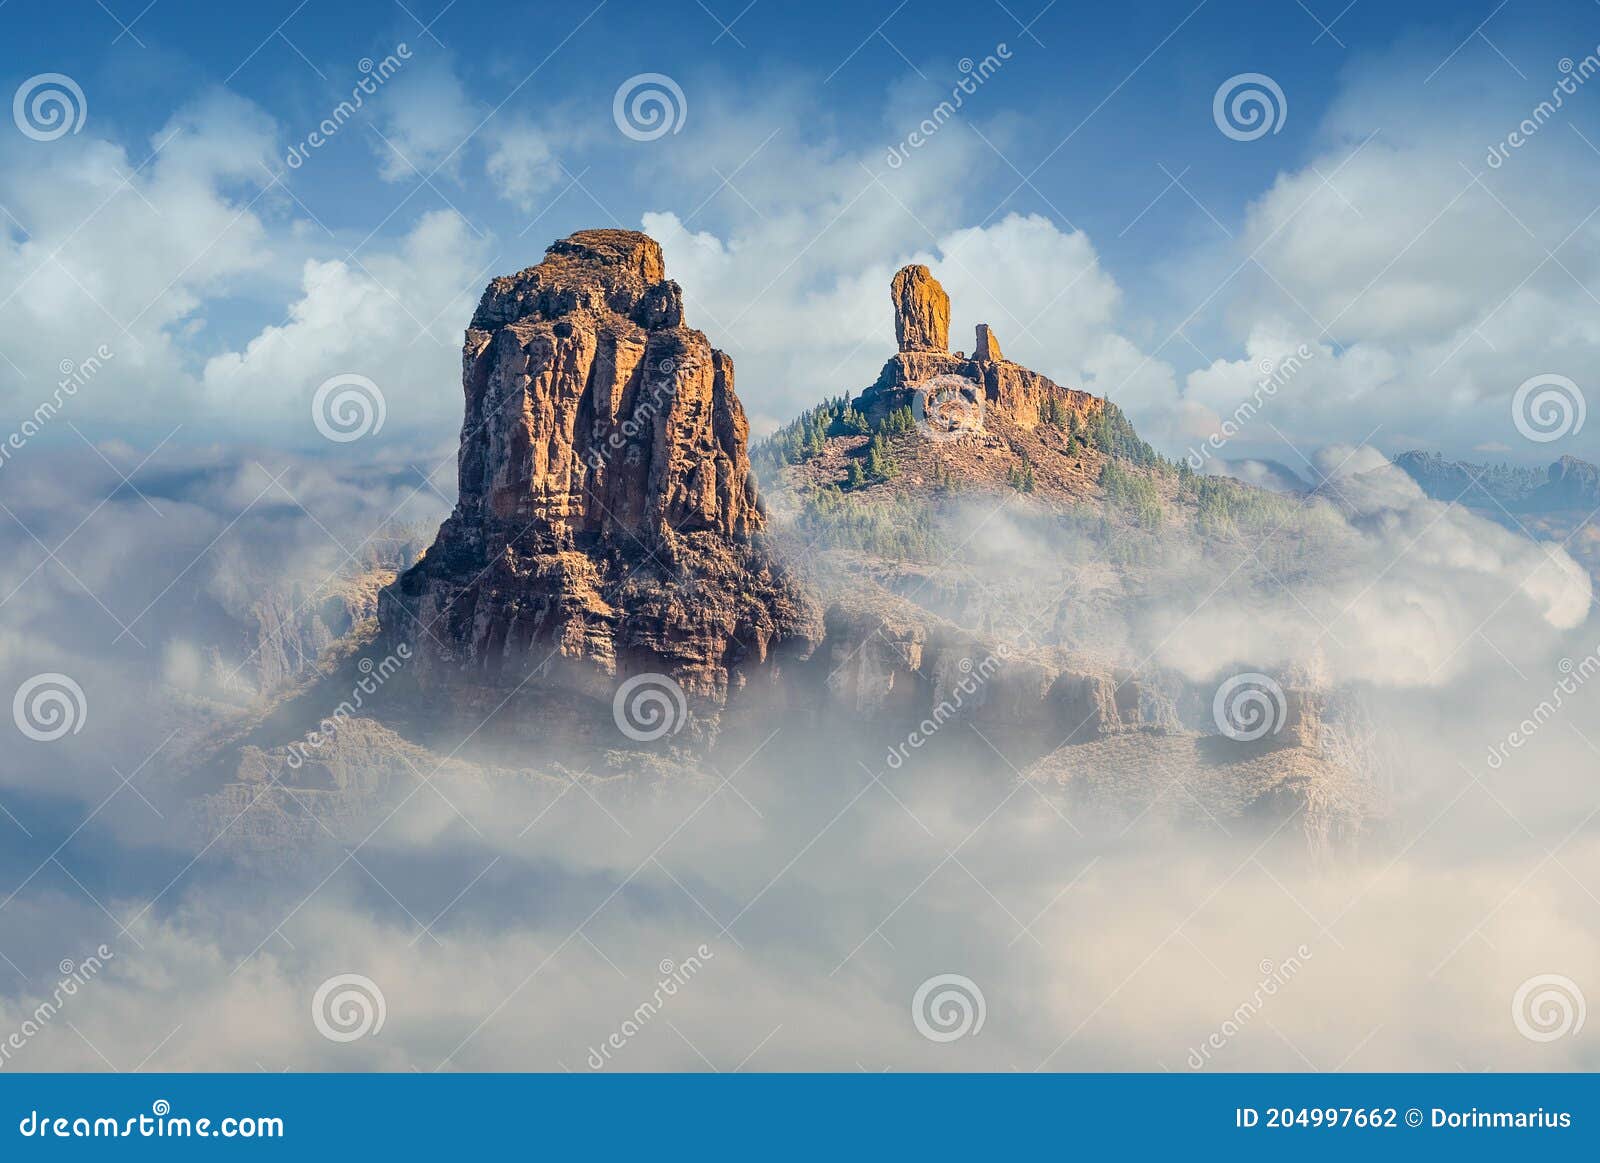 landscape with roque bentayga and roque nublo